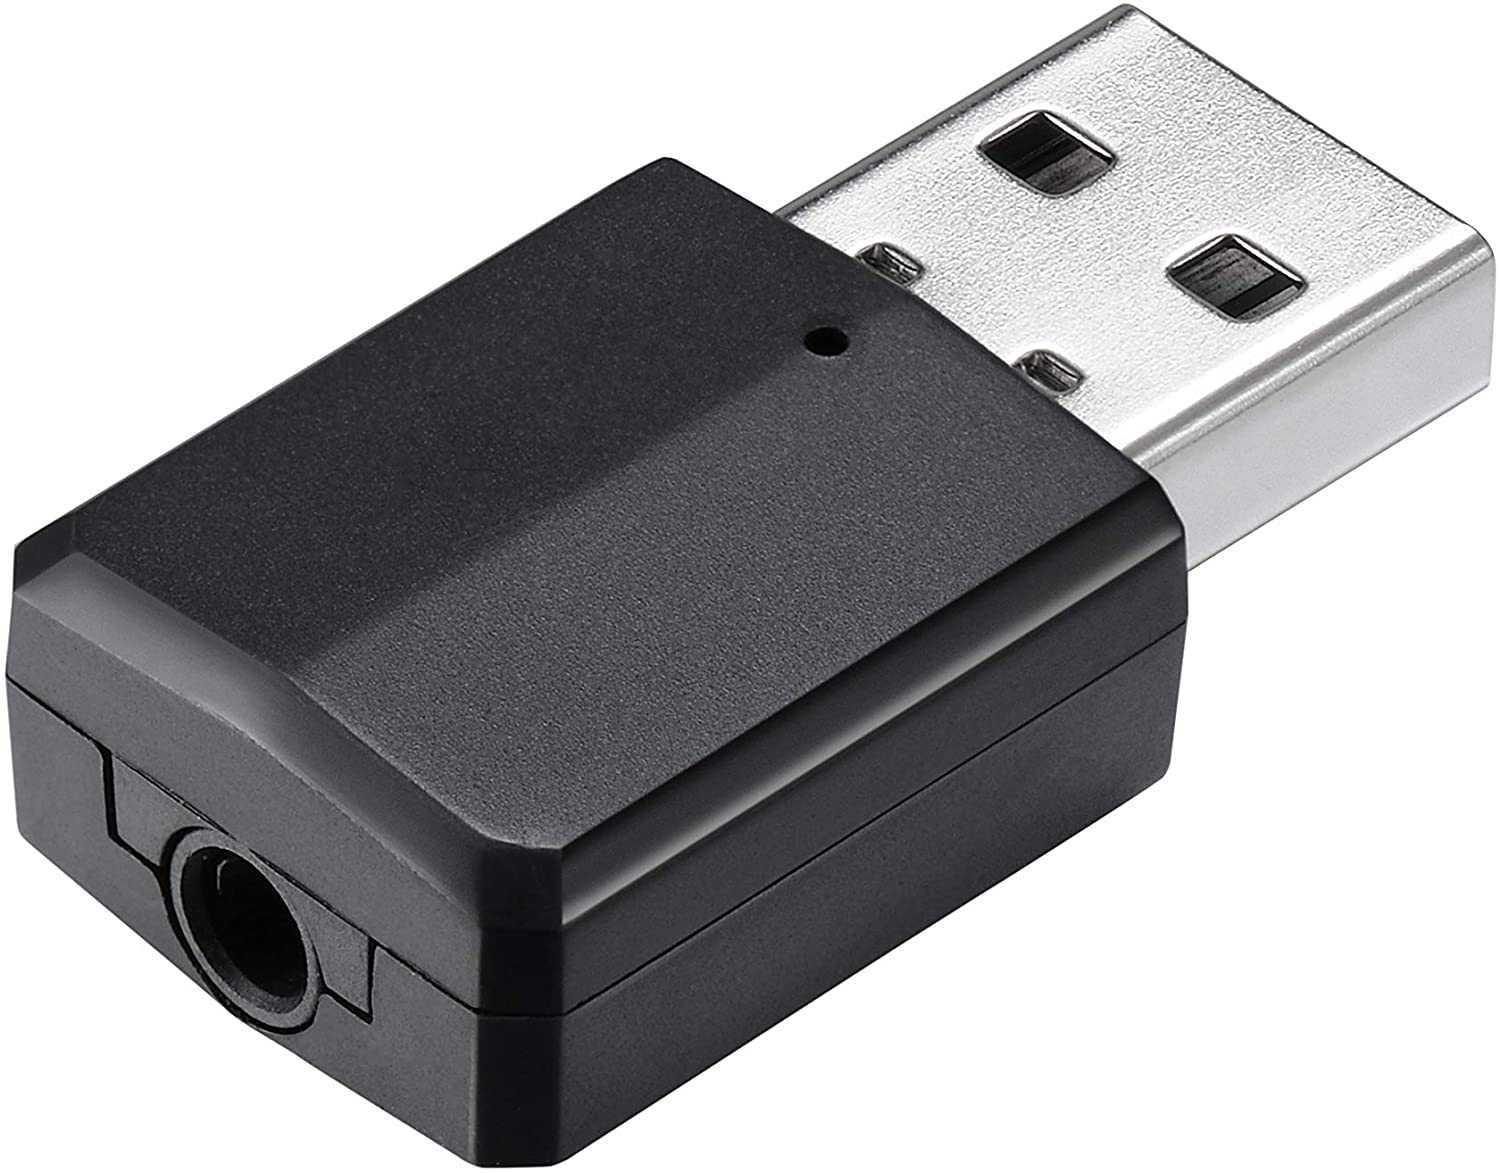 Adaptador de receptor Bluetooth USB 5.0 AUX 3.5mm Audio Jack